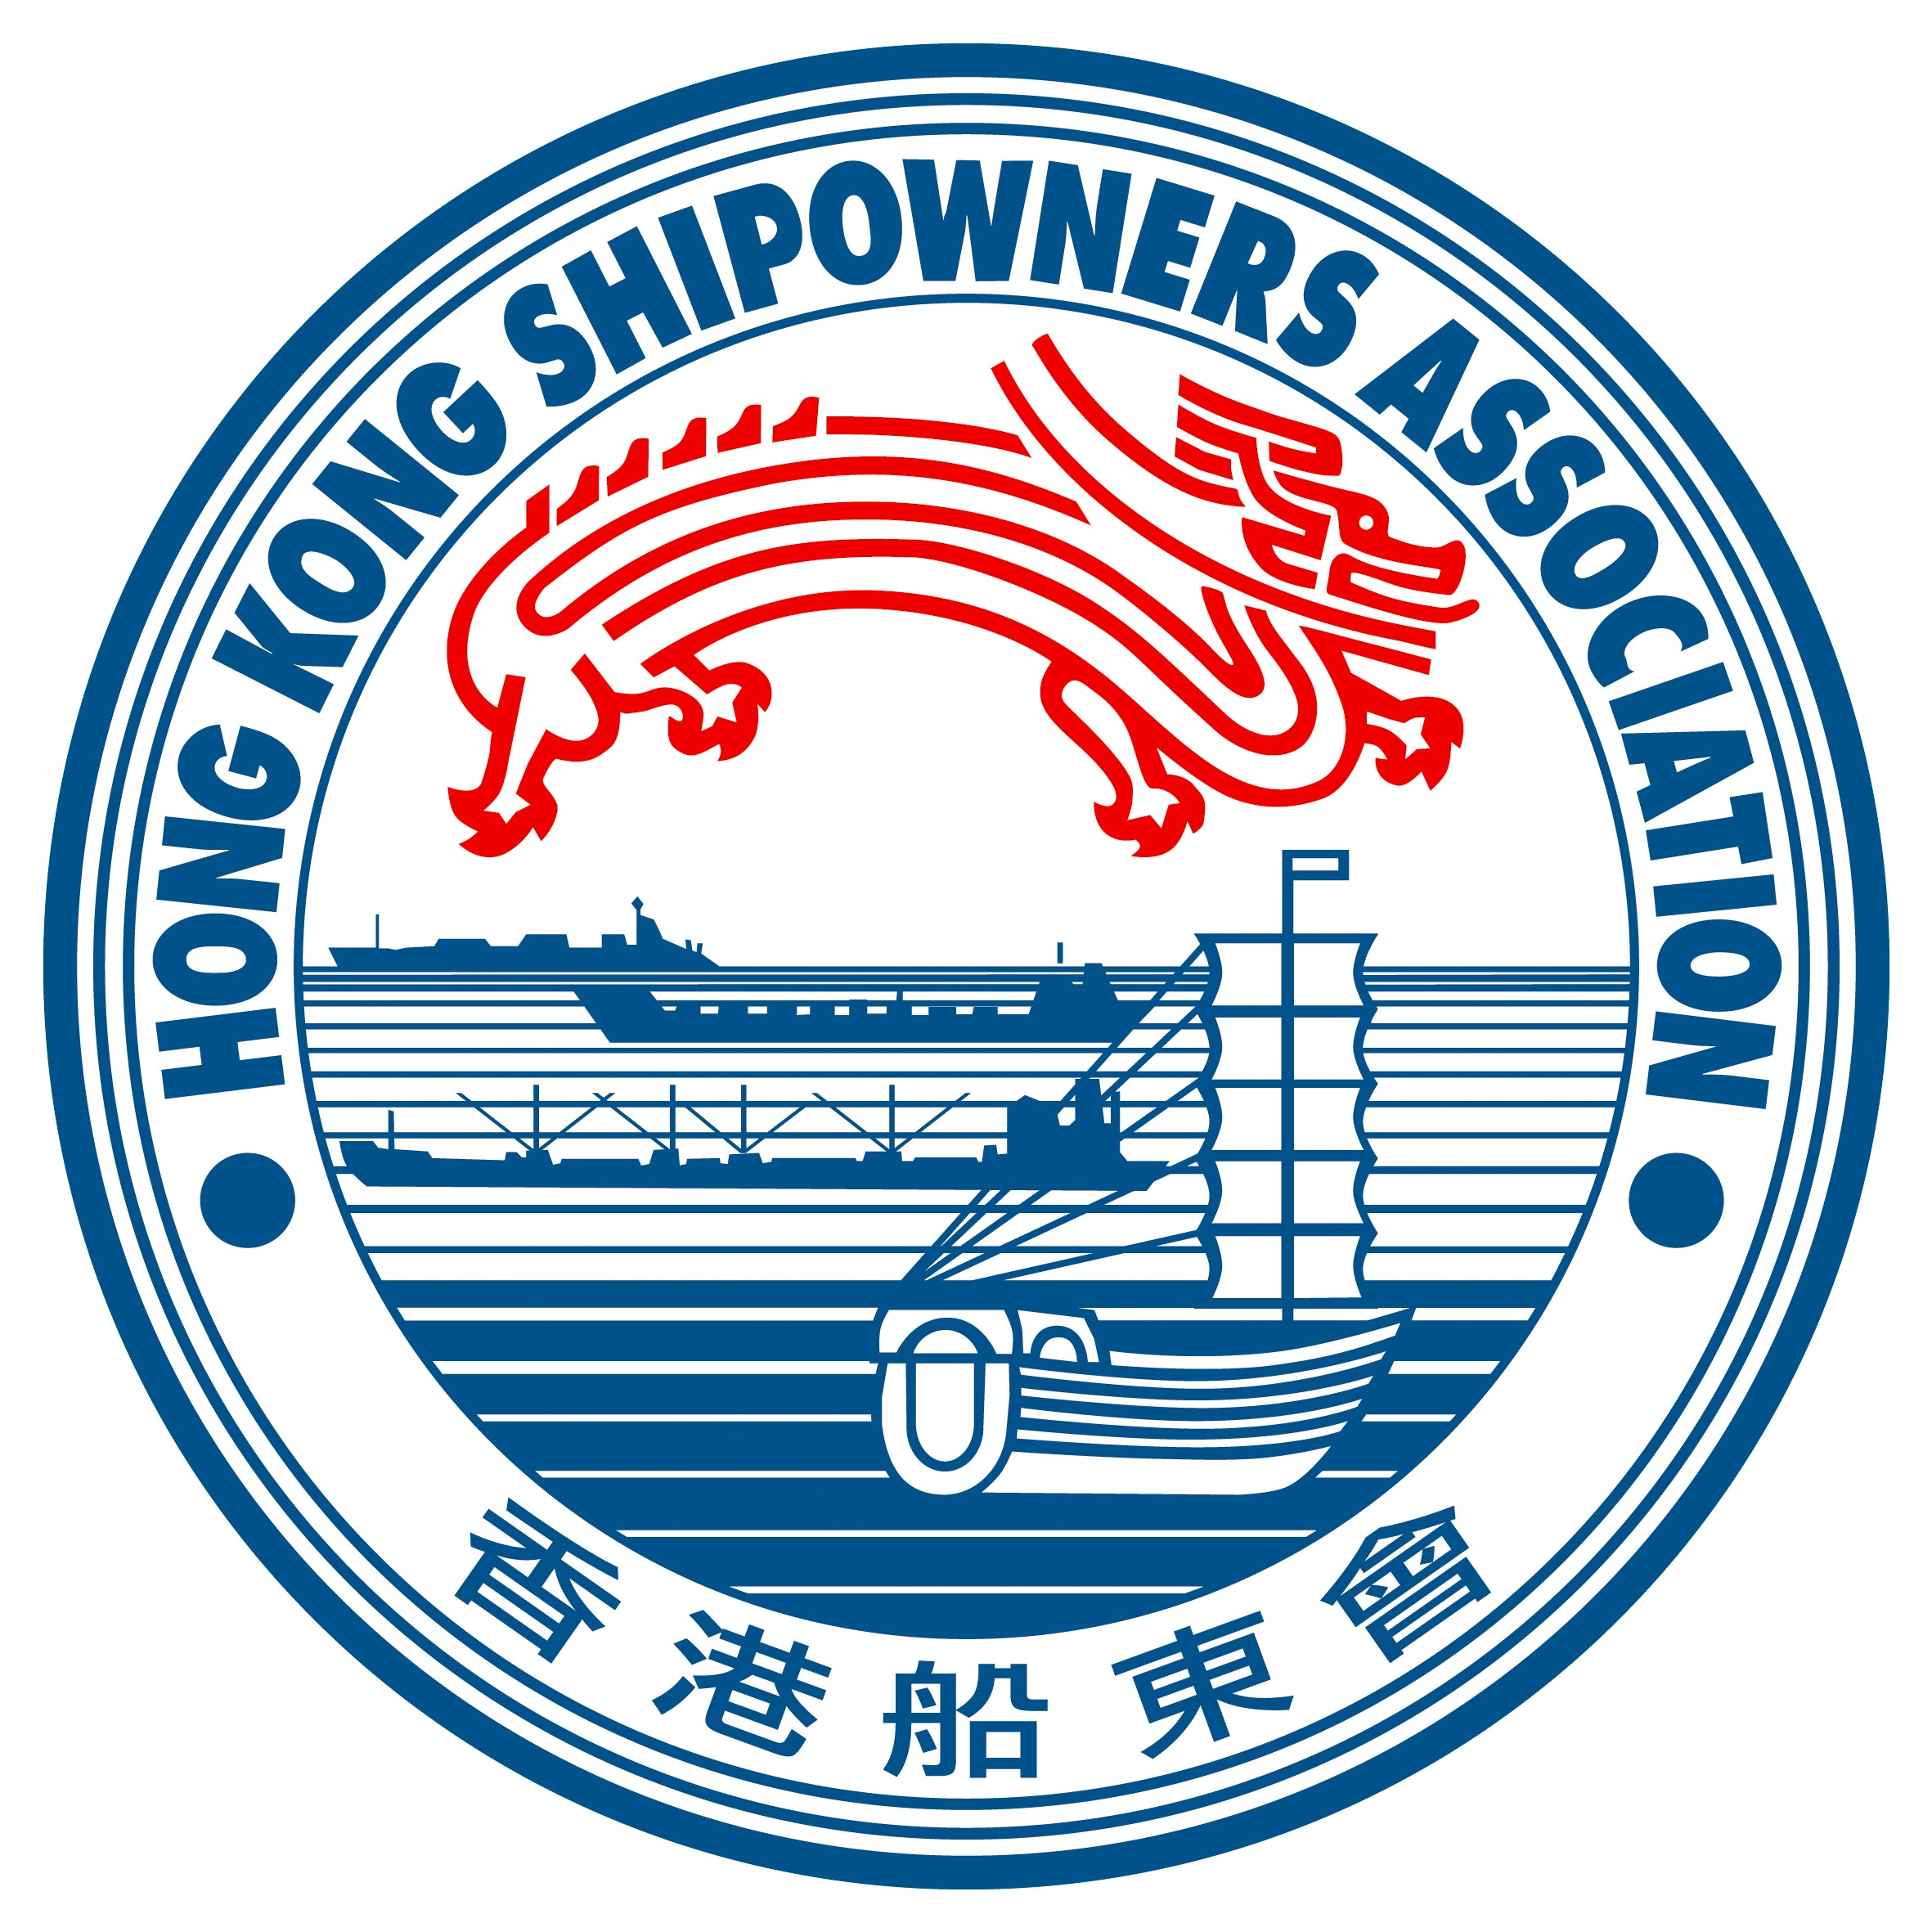 The Hong Kong Shipowners Association